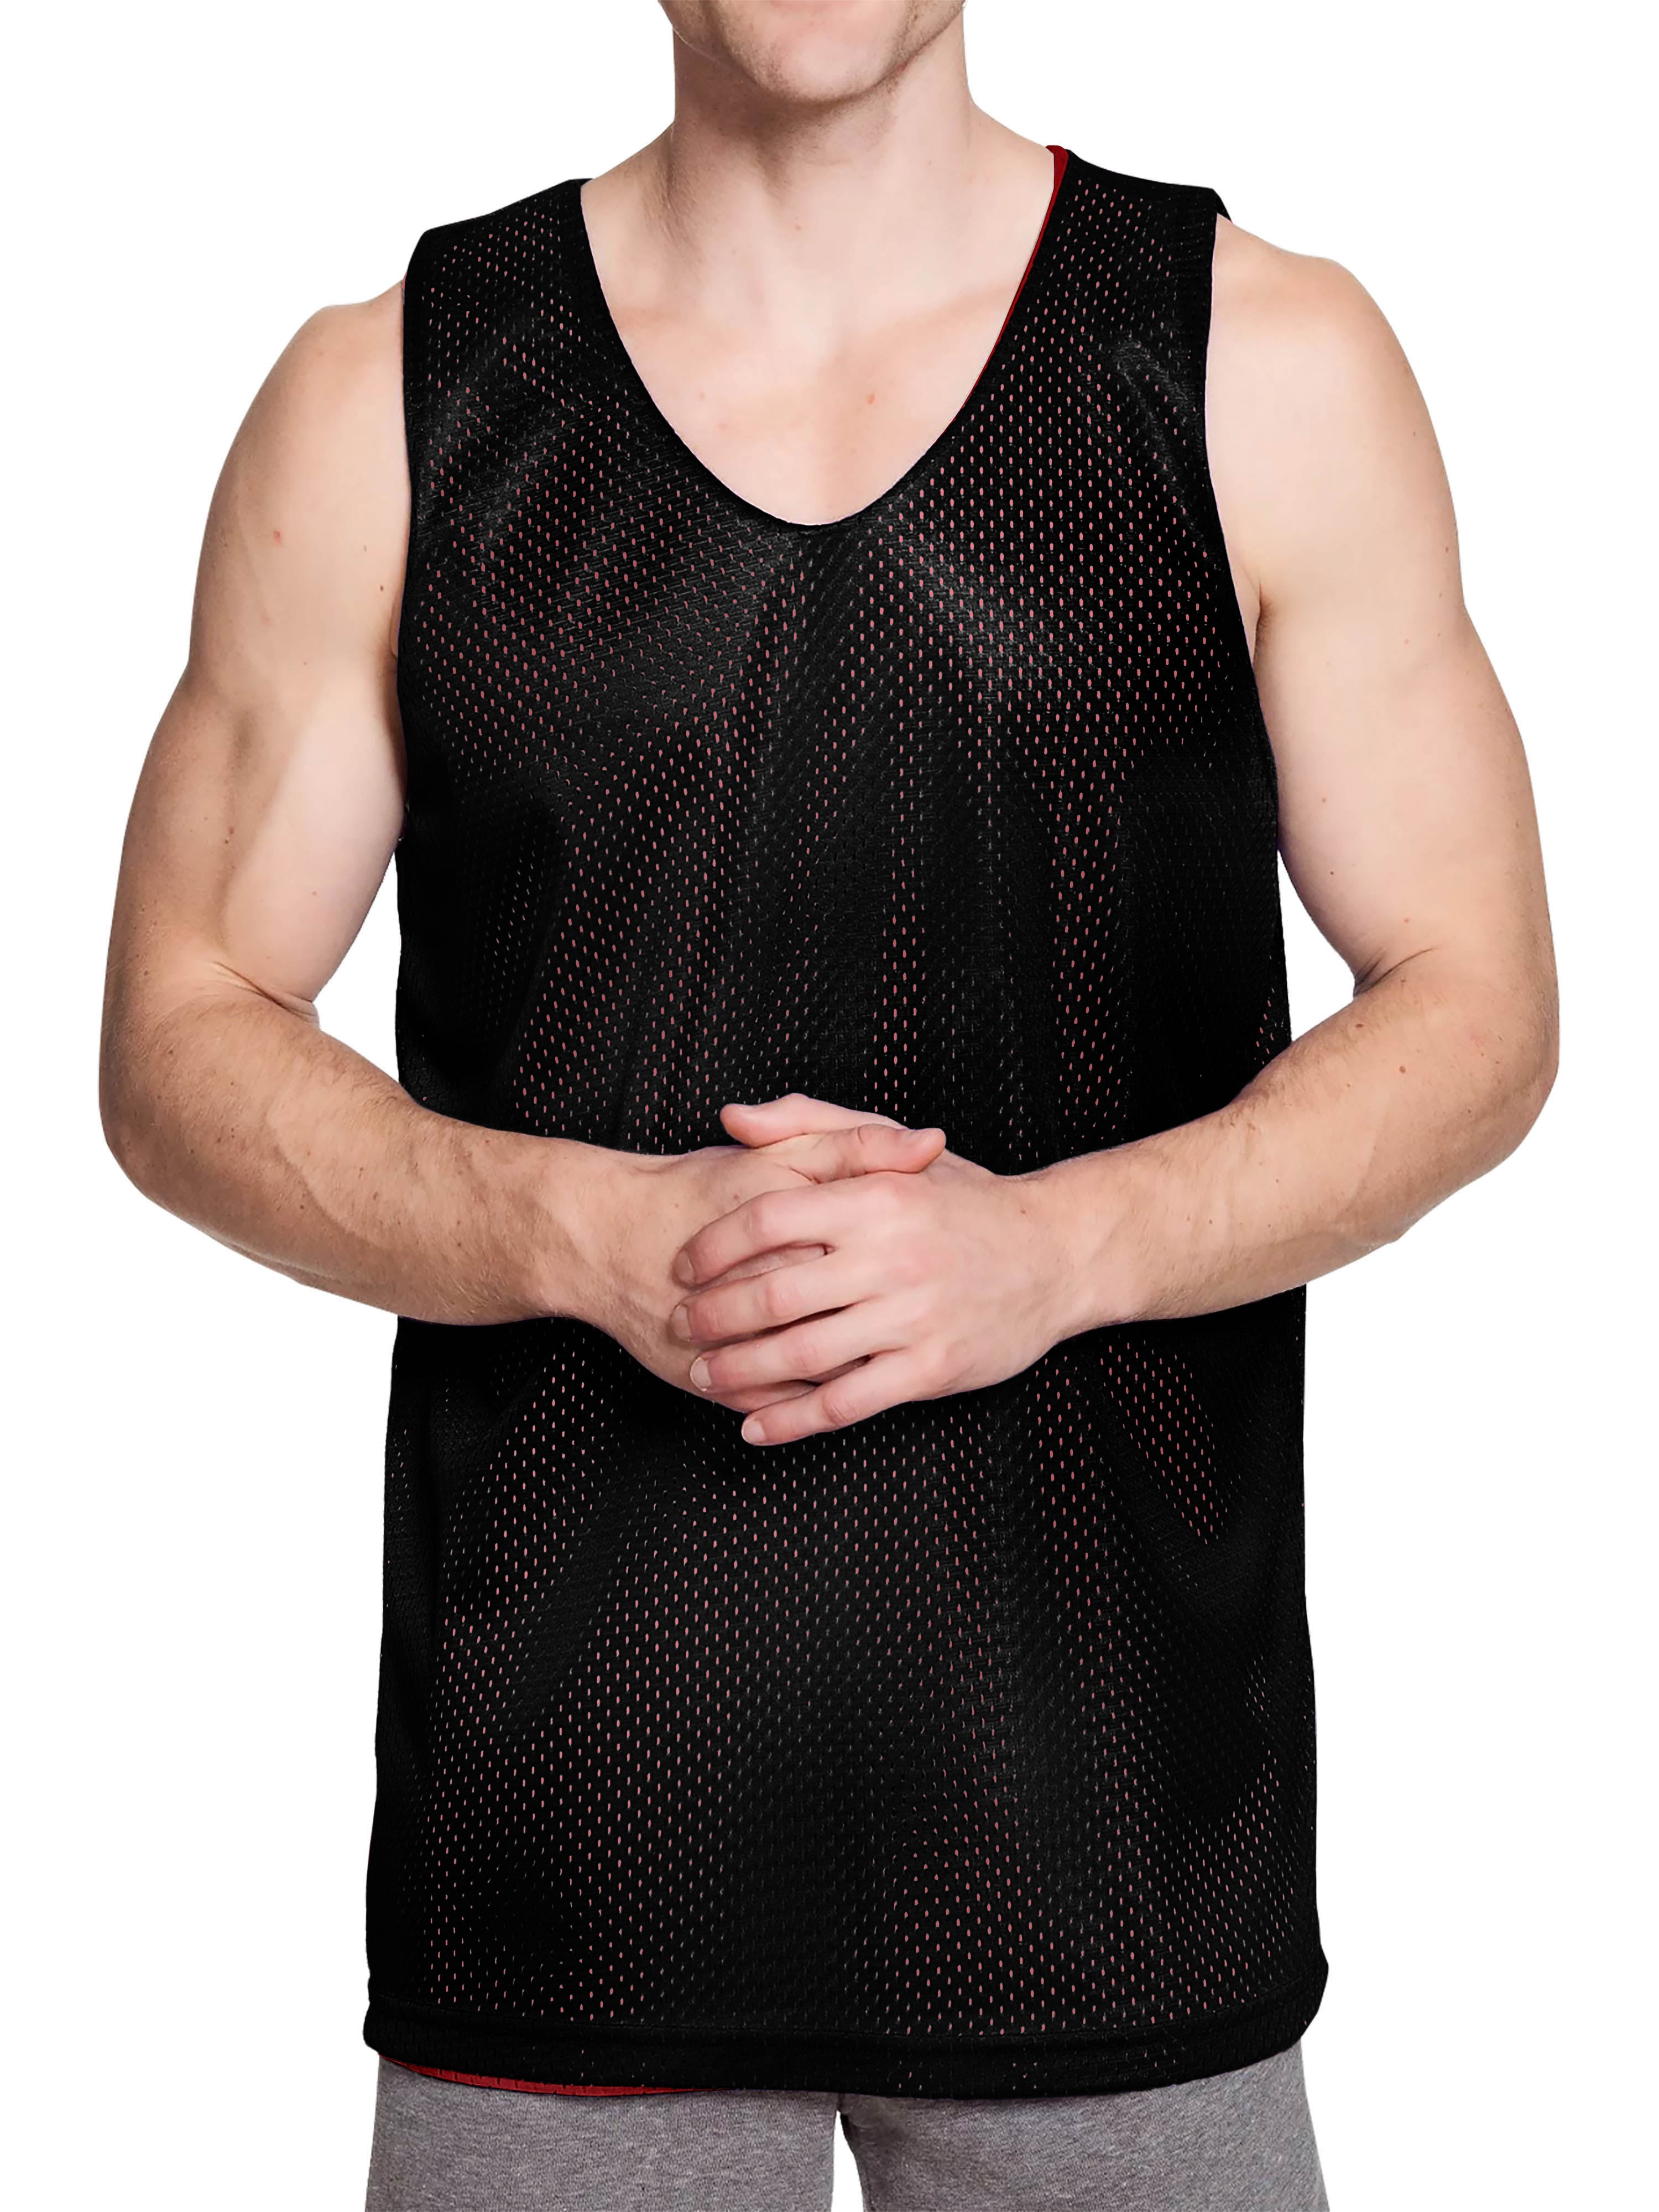  Phoneutrix Blank Basketball Jersey, Men's Mesh Athletic  Reversible Sports Shirts S-3XL : Sports & Outdoors